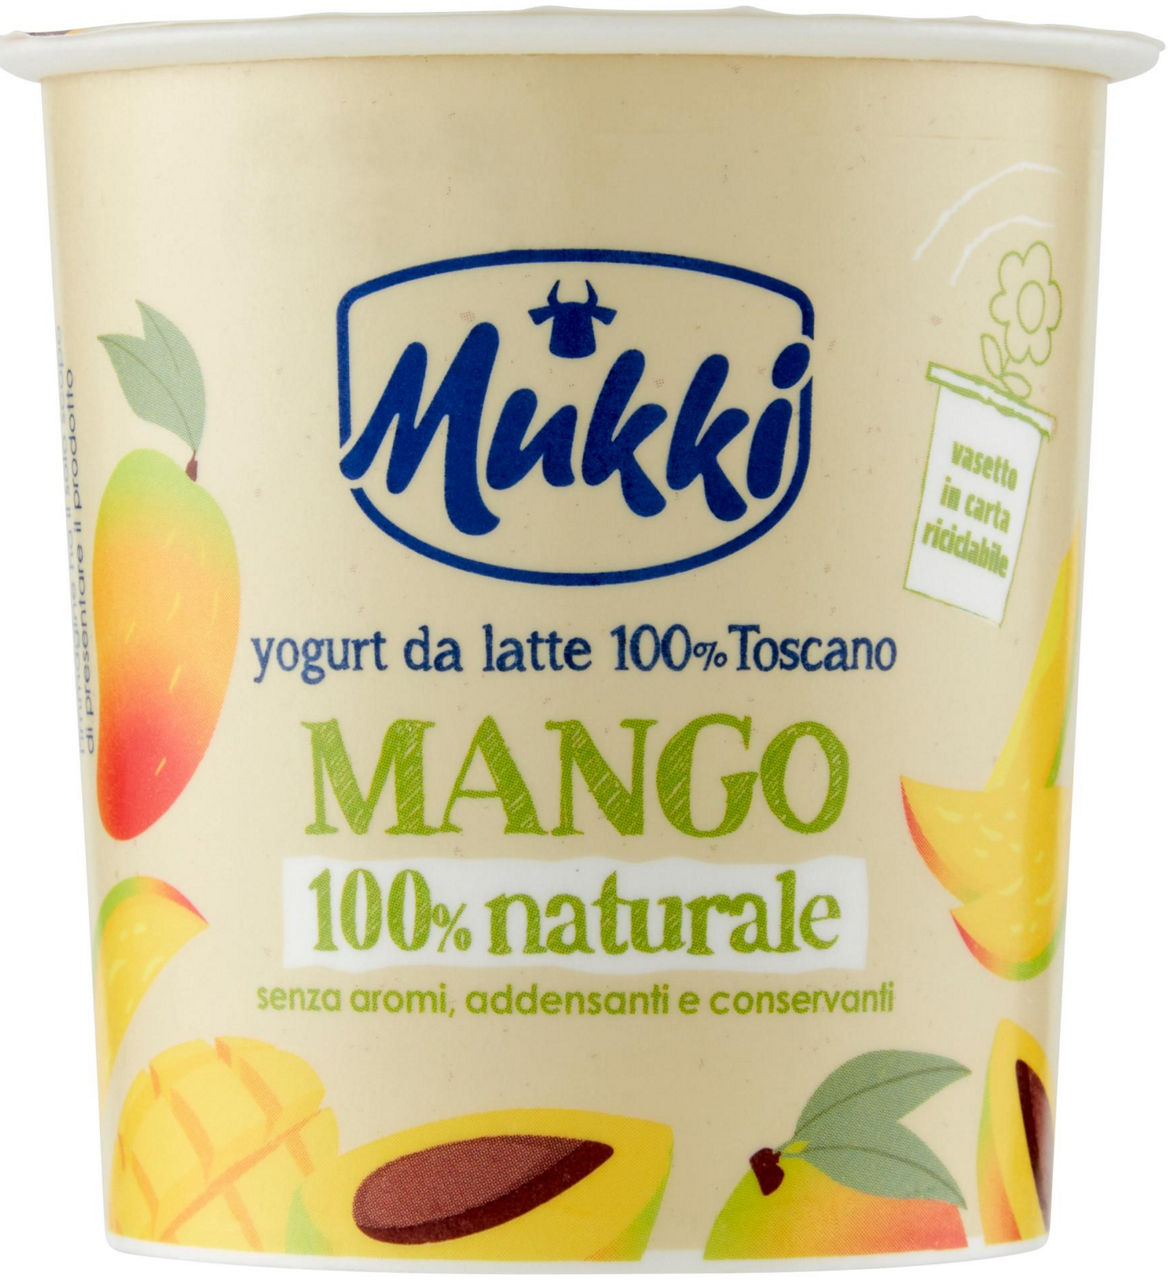 Yog.int. mukki mango 100% naturale g115